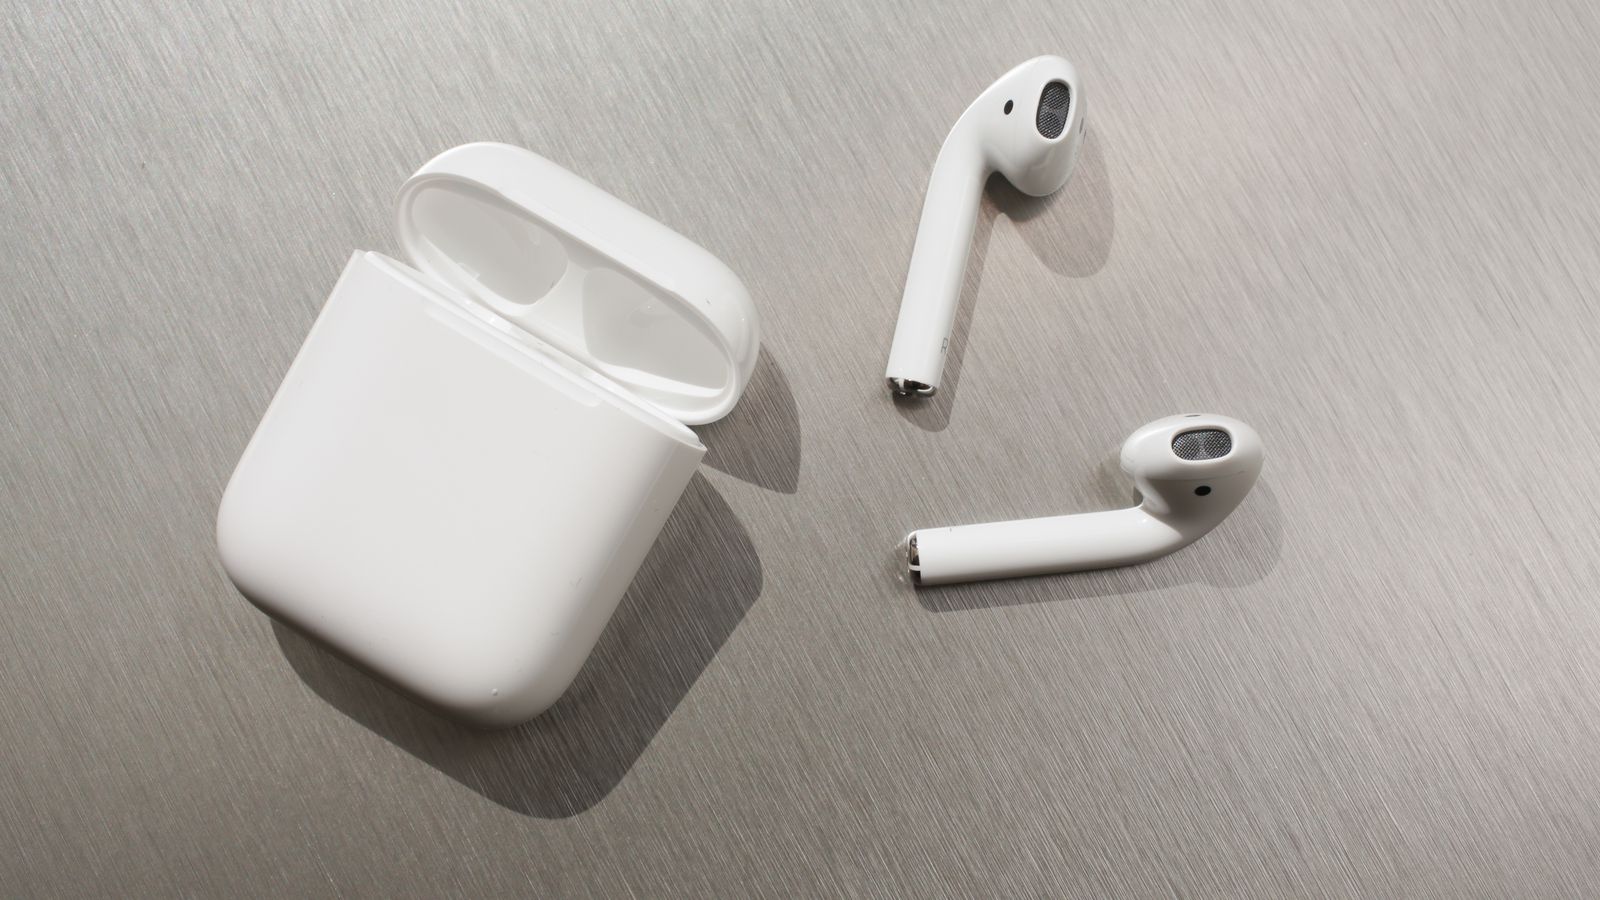 Apple sedang garap AirPod baru